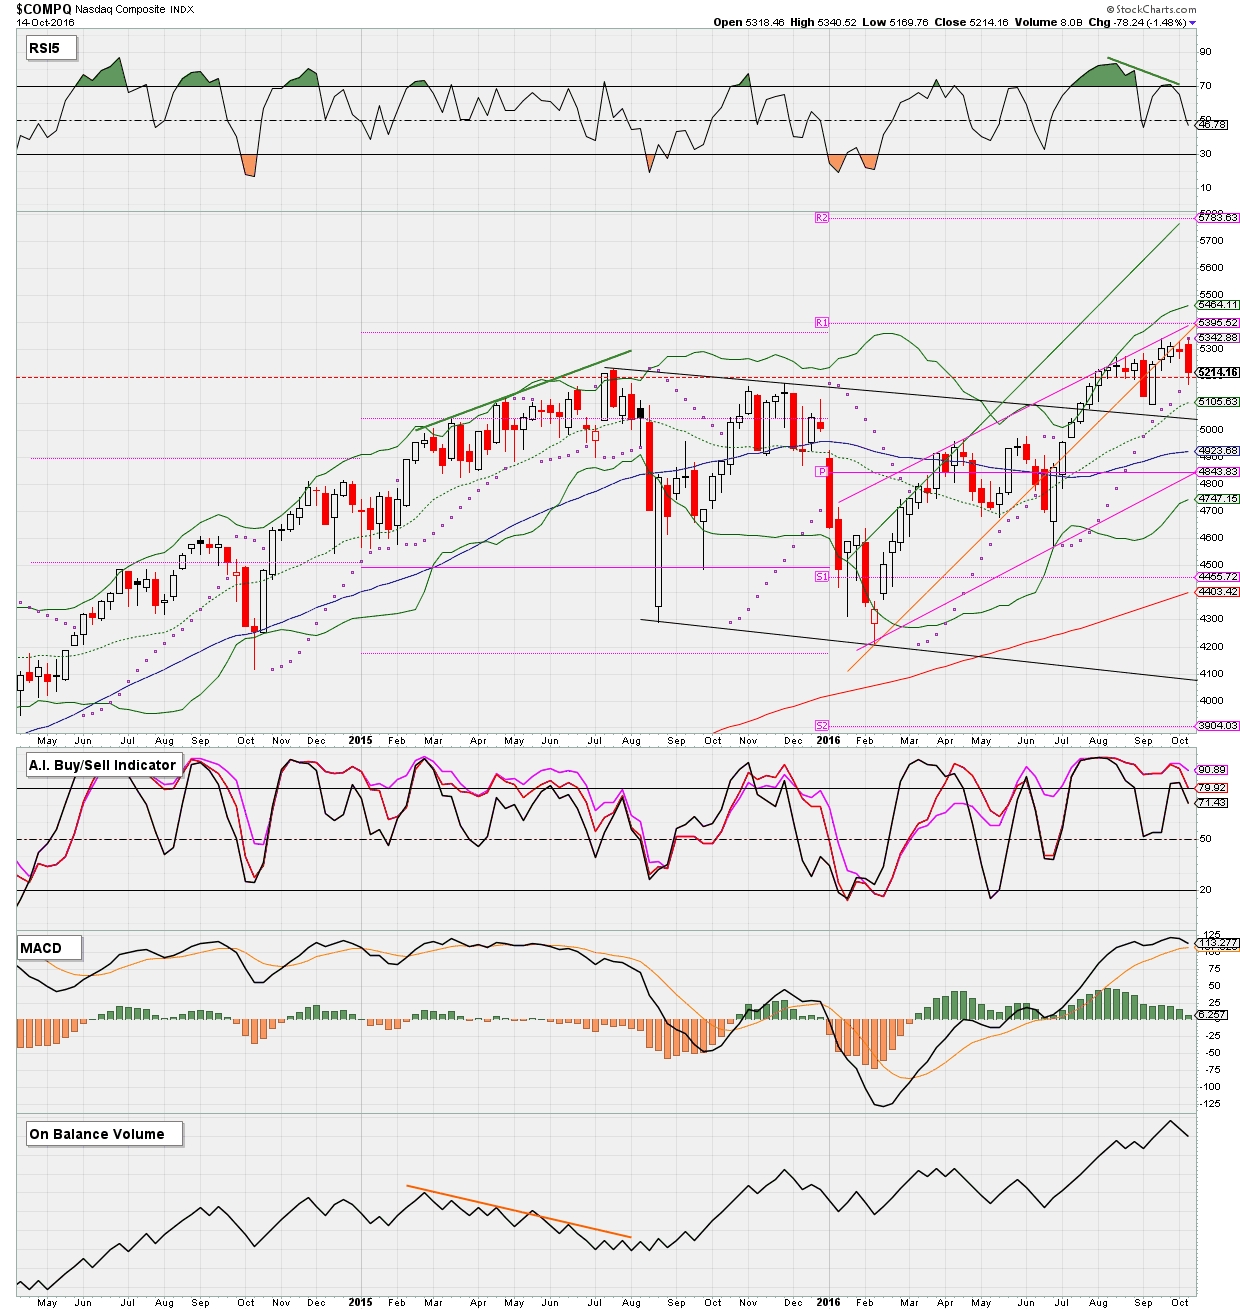 NASDAQ Weekly Chart with Technical Indicators.